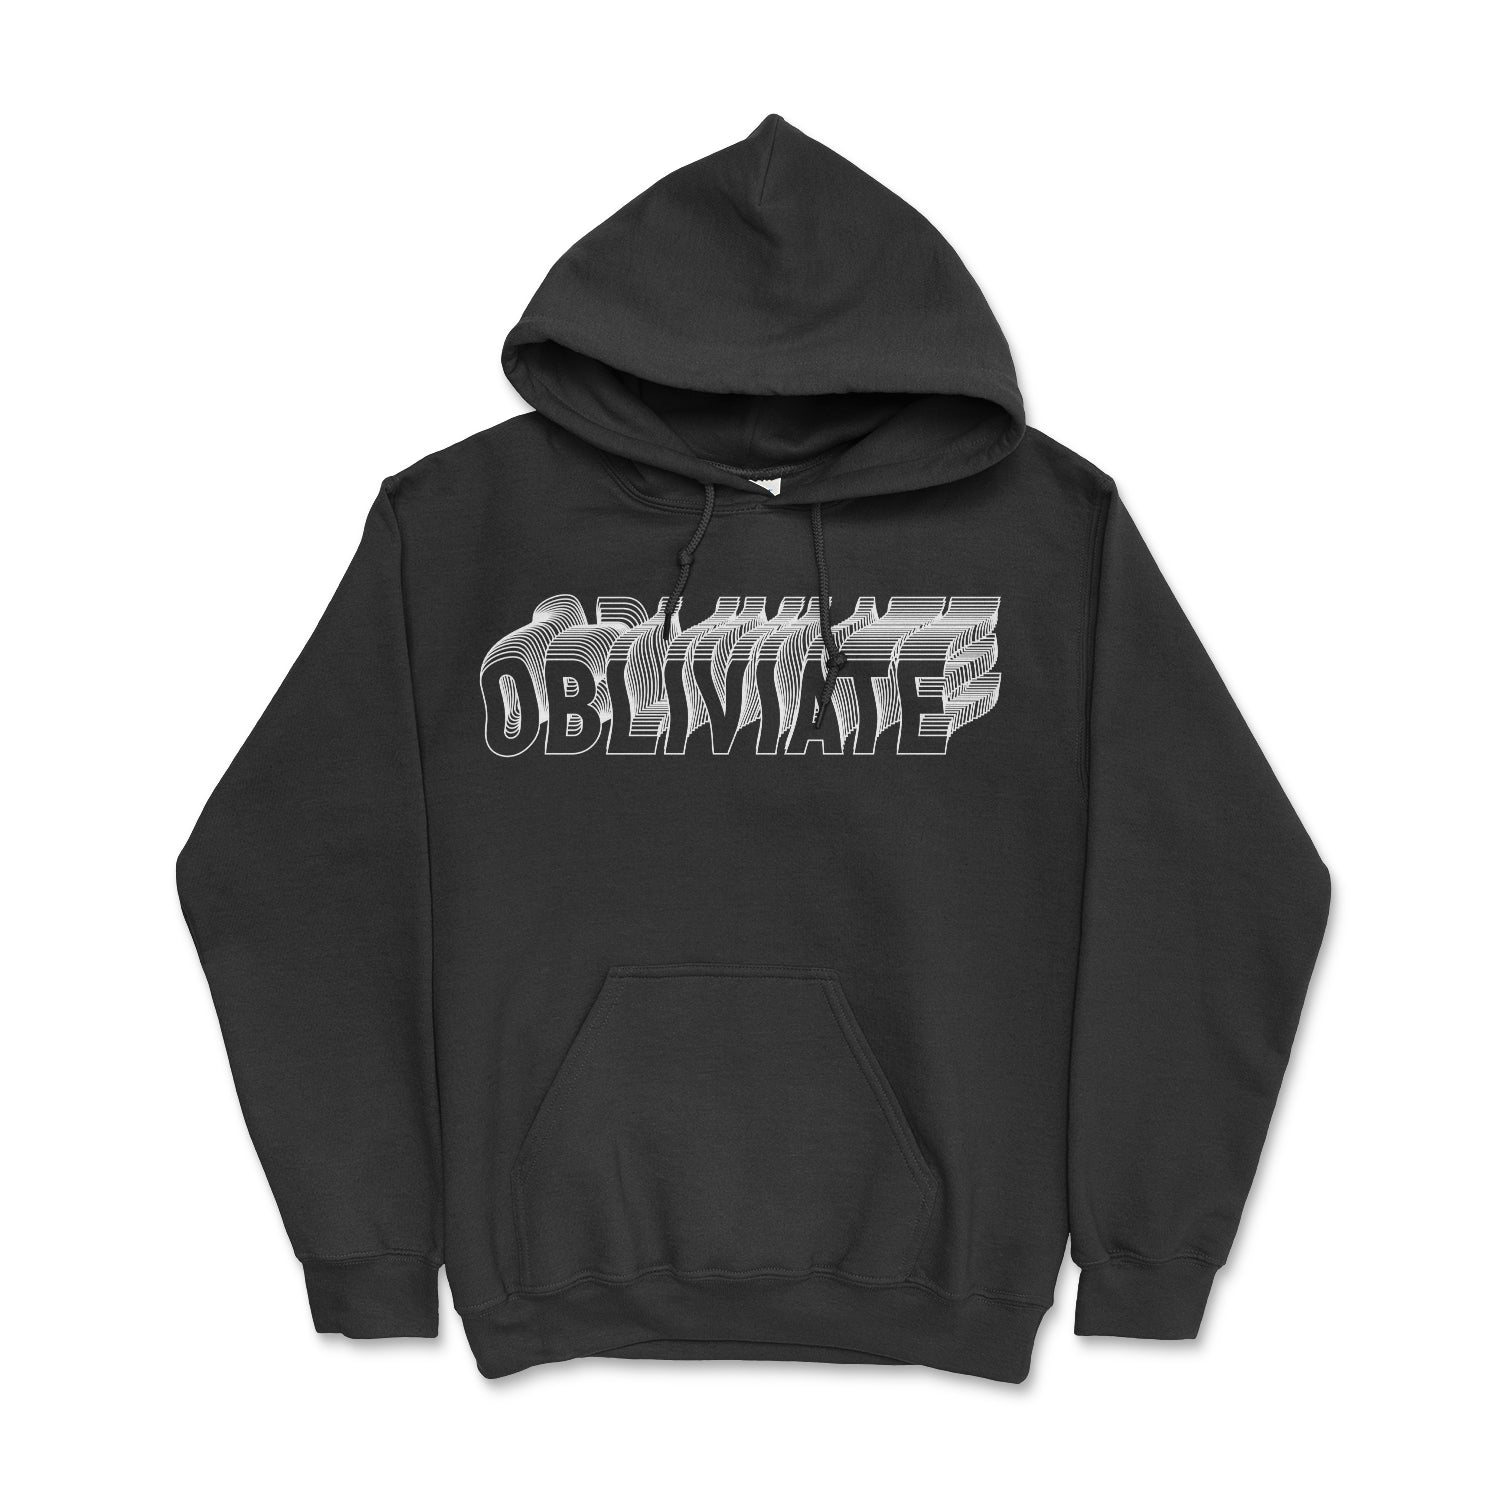 Obliviate Graphic Sweatshirt/Hoodie